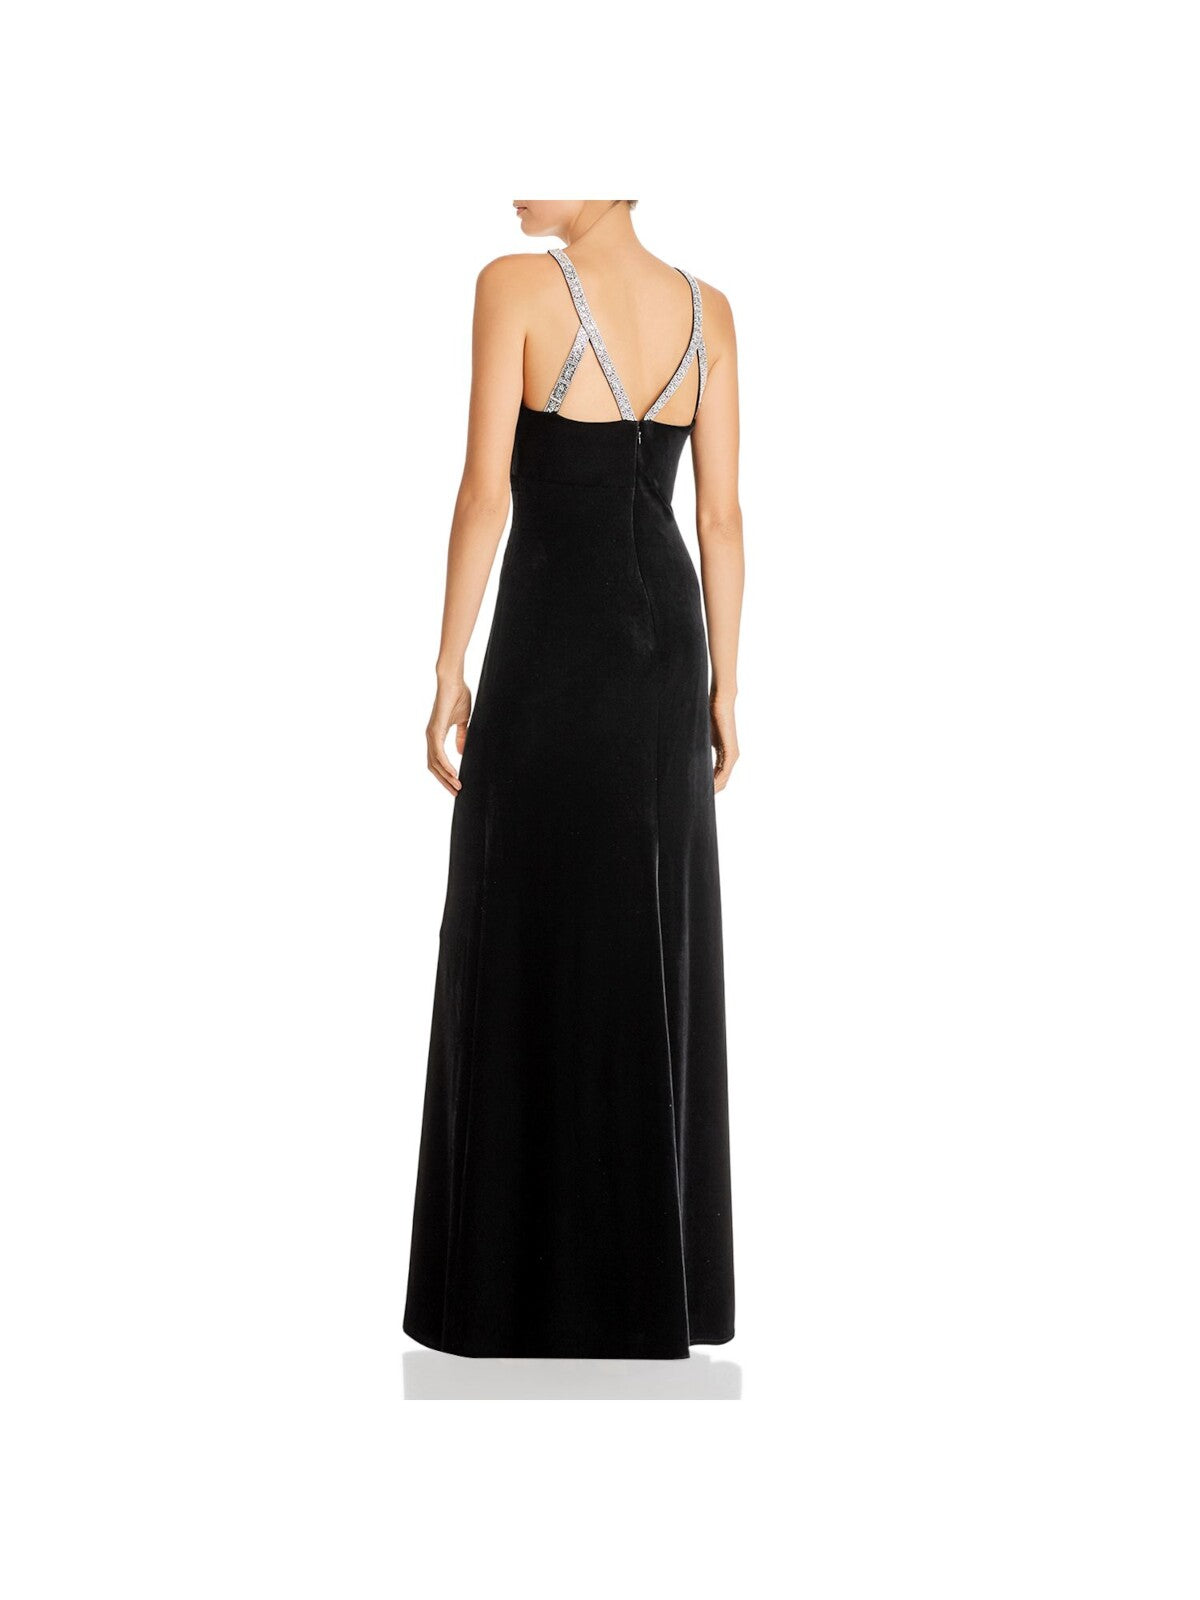 AQUA FORMAL Womens Black Textured Zippered Rhinestone Straps Lined Pleated Sleeveless Jewel Neck Full-Length Evening Gown Dress 2